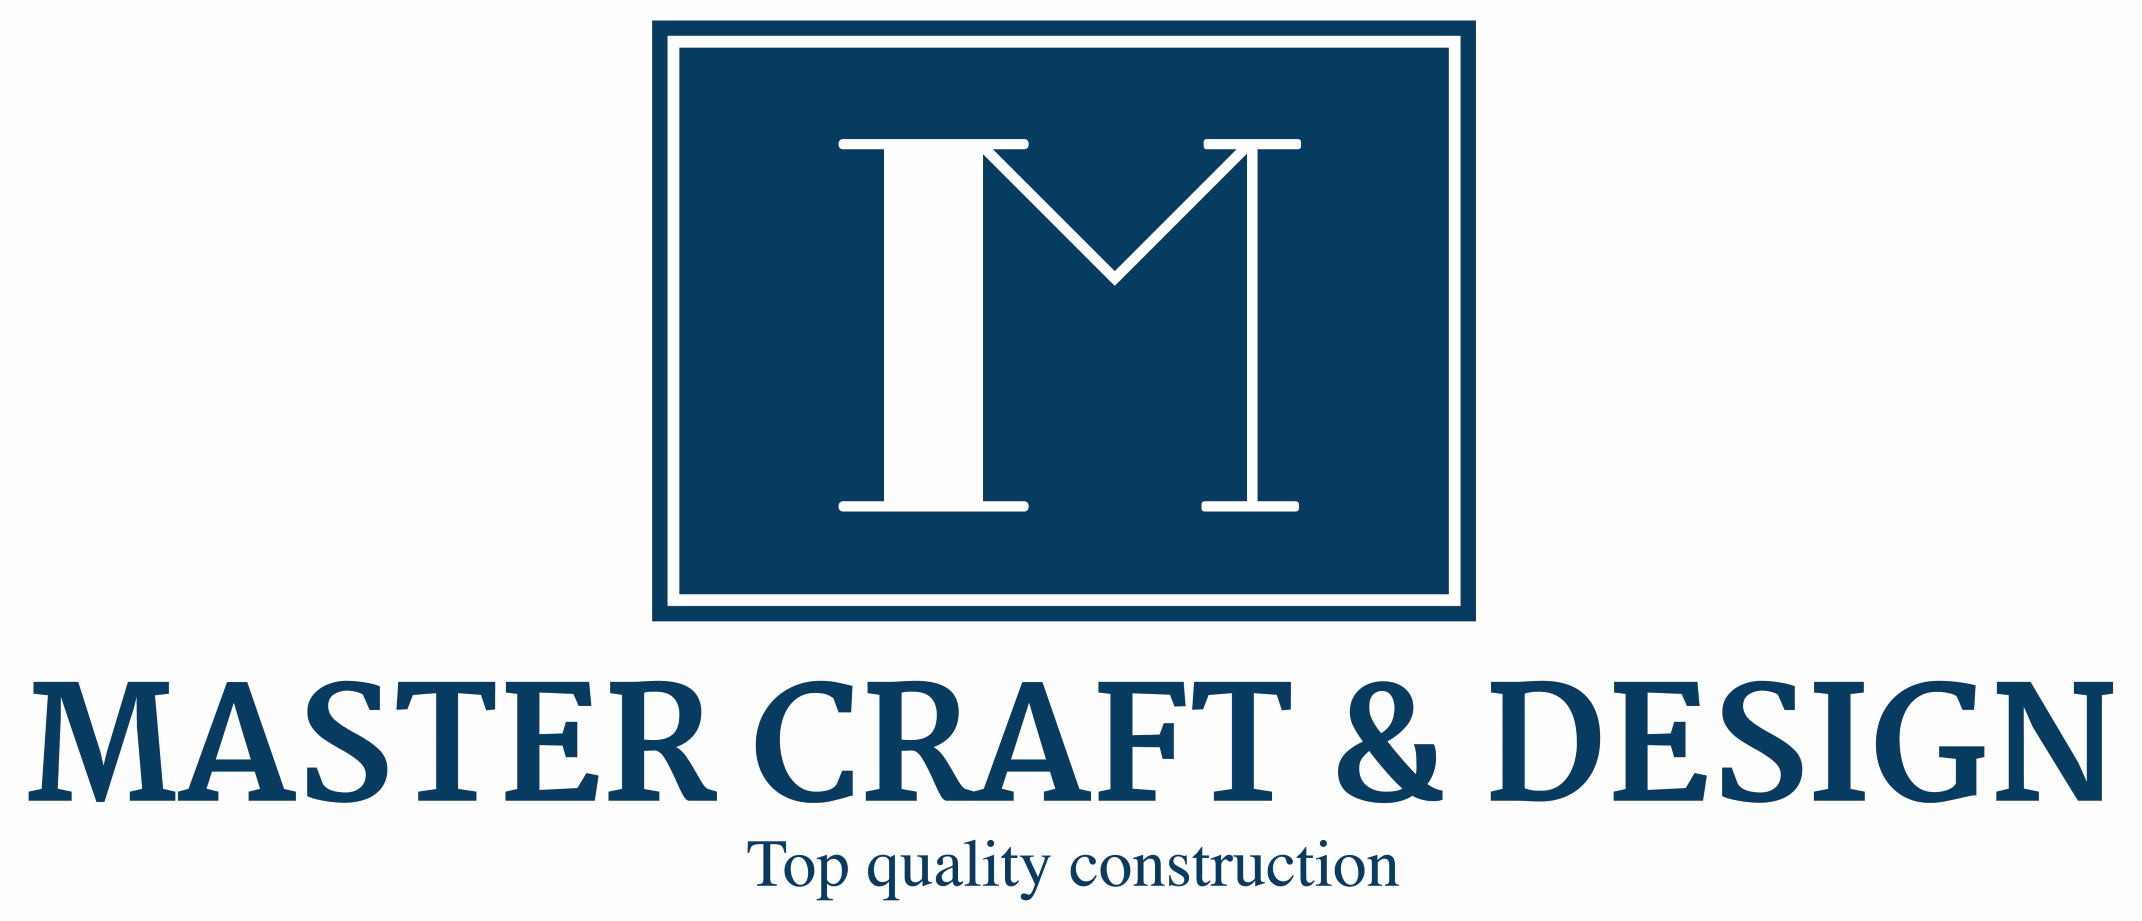 Master Craft & Design Corporation Logo